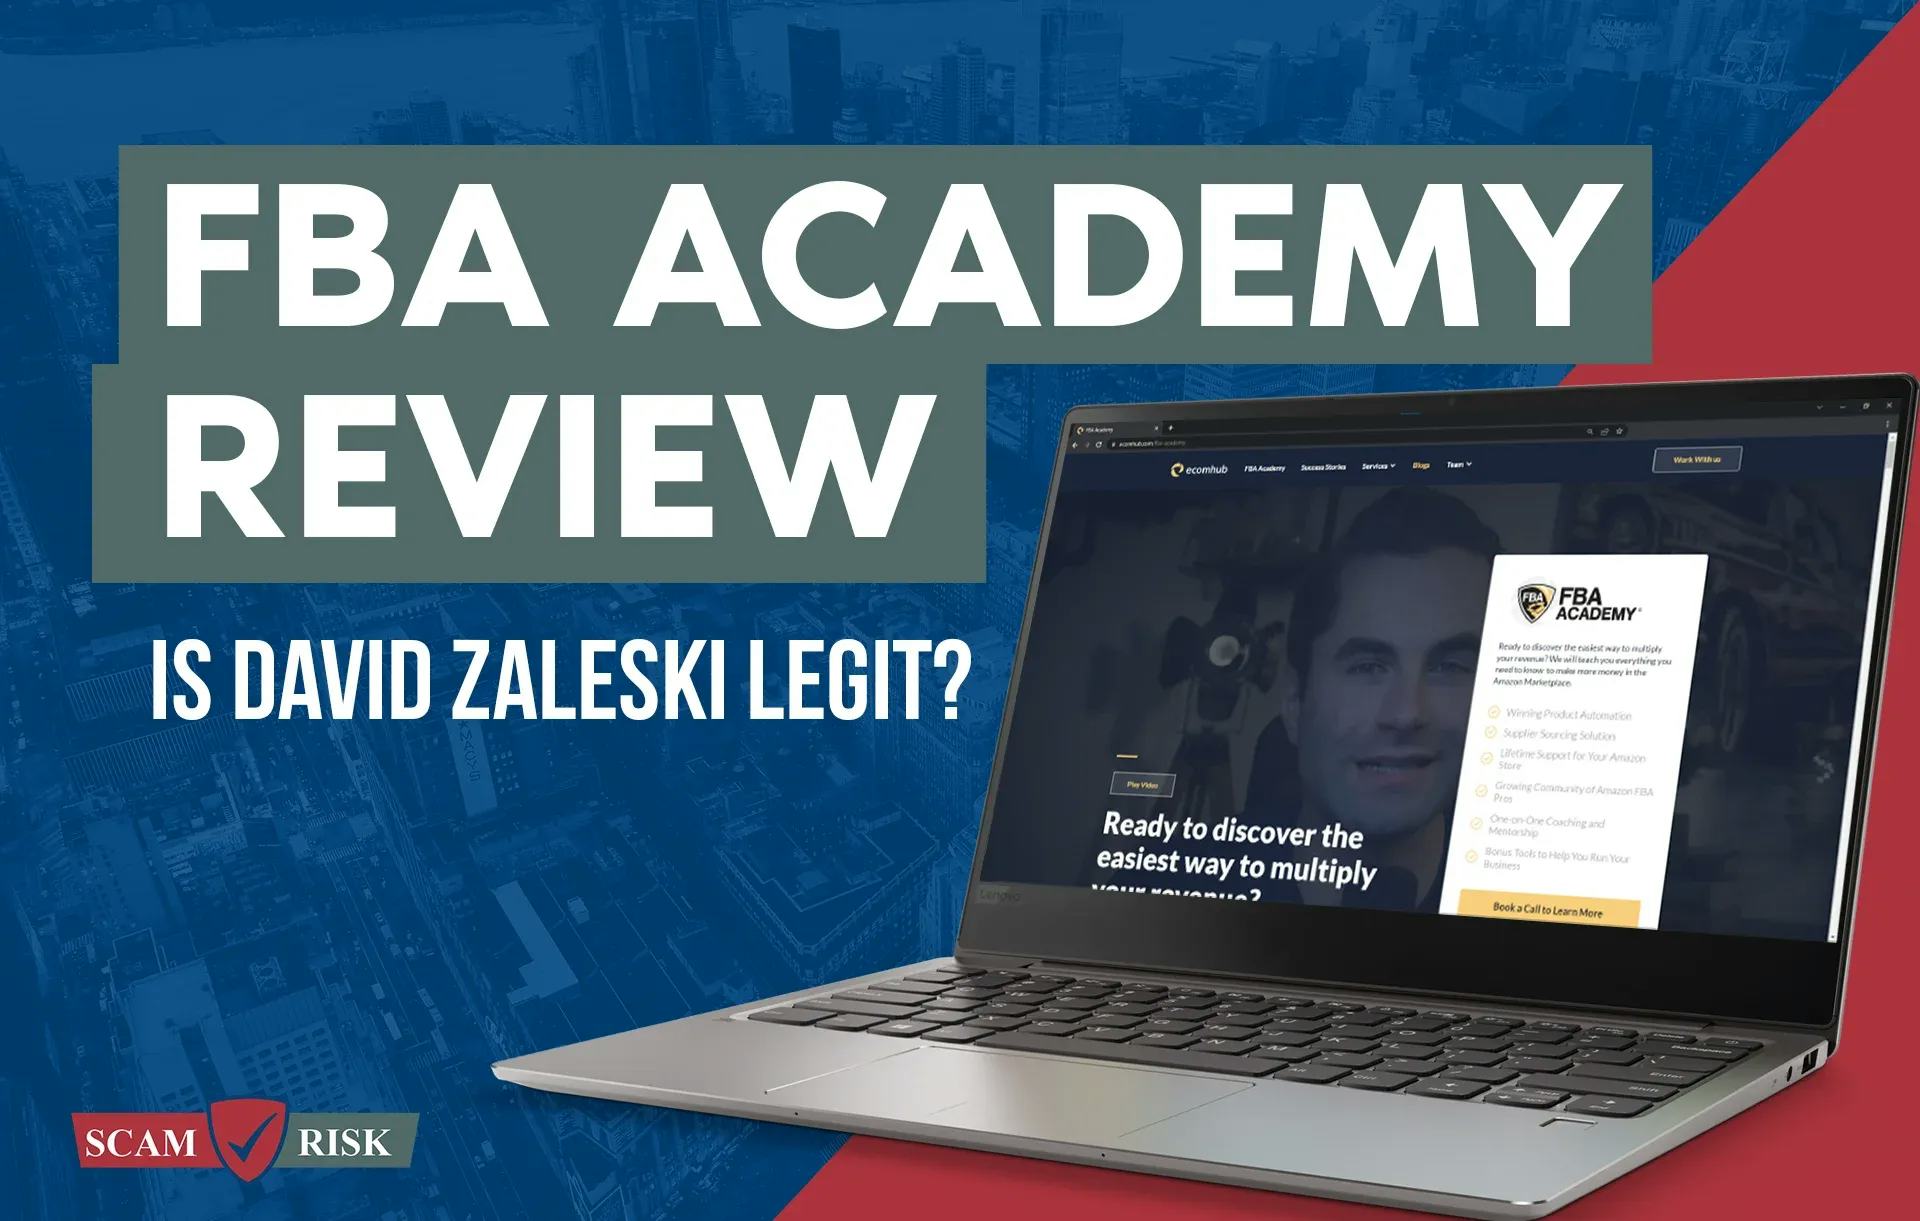 FBA Academy Reviews: Is David Zaleski Legit?